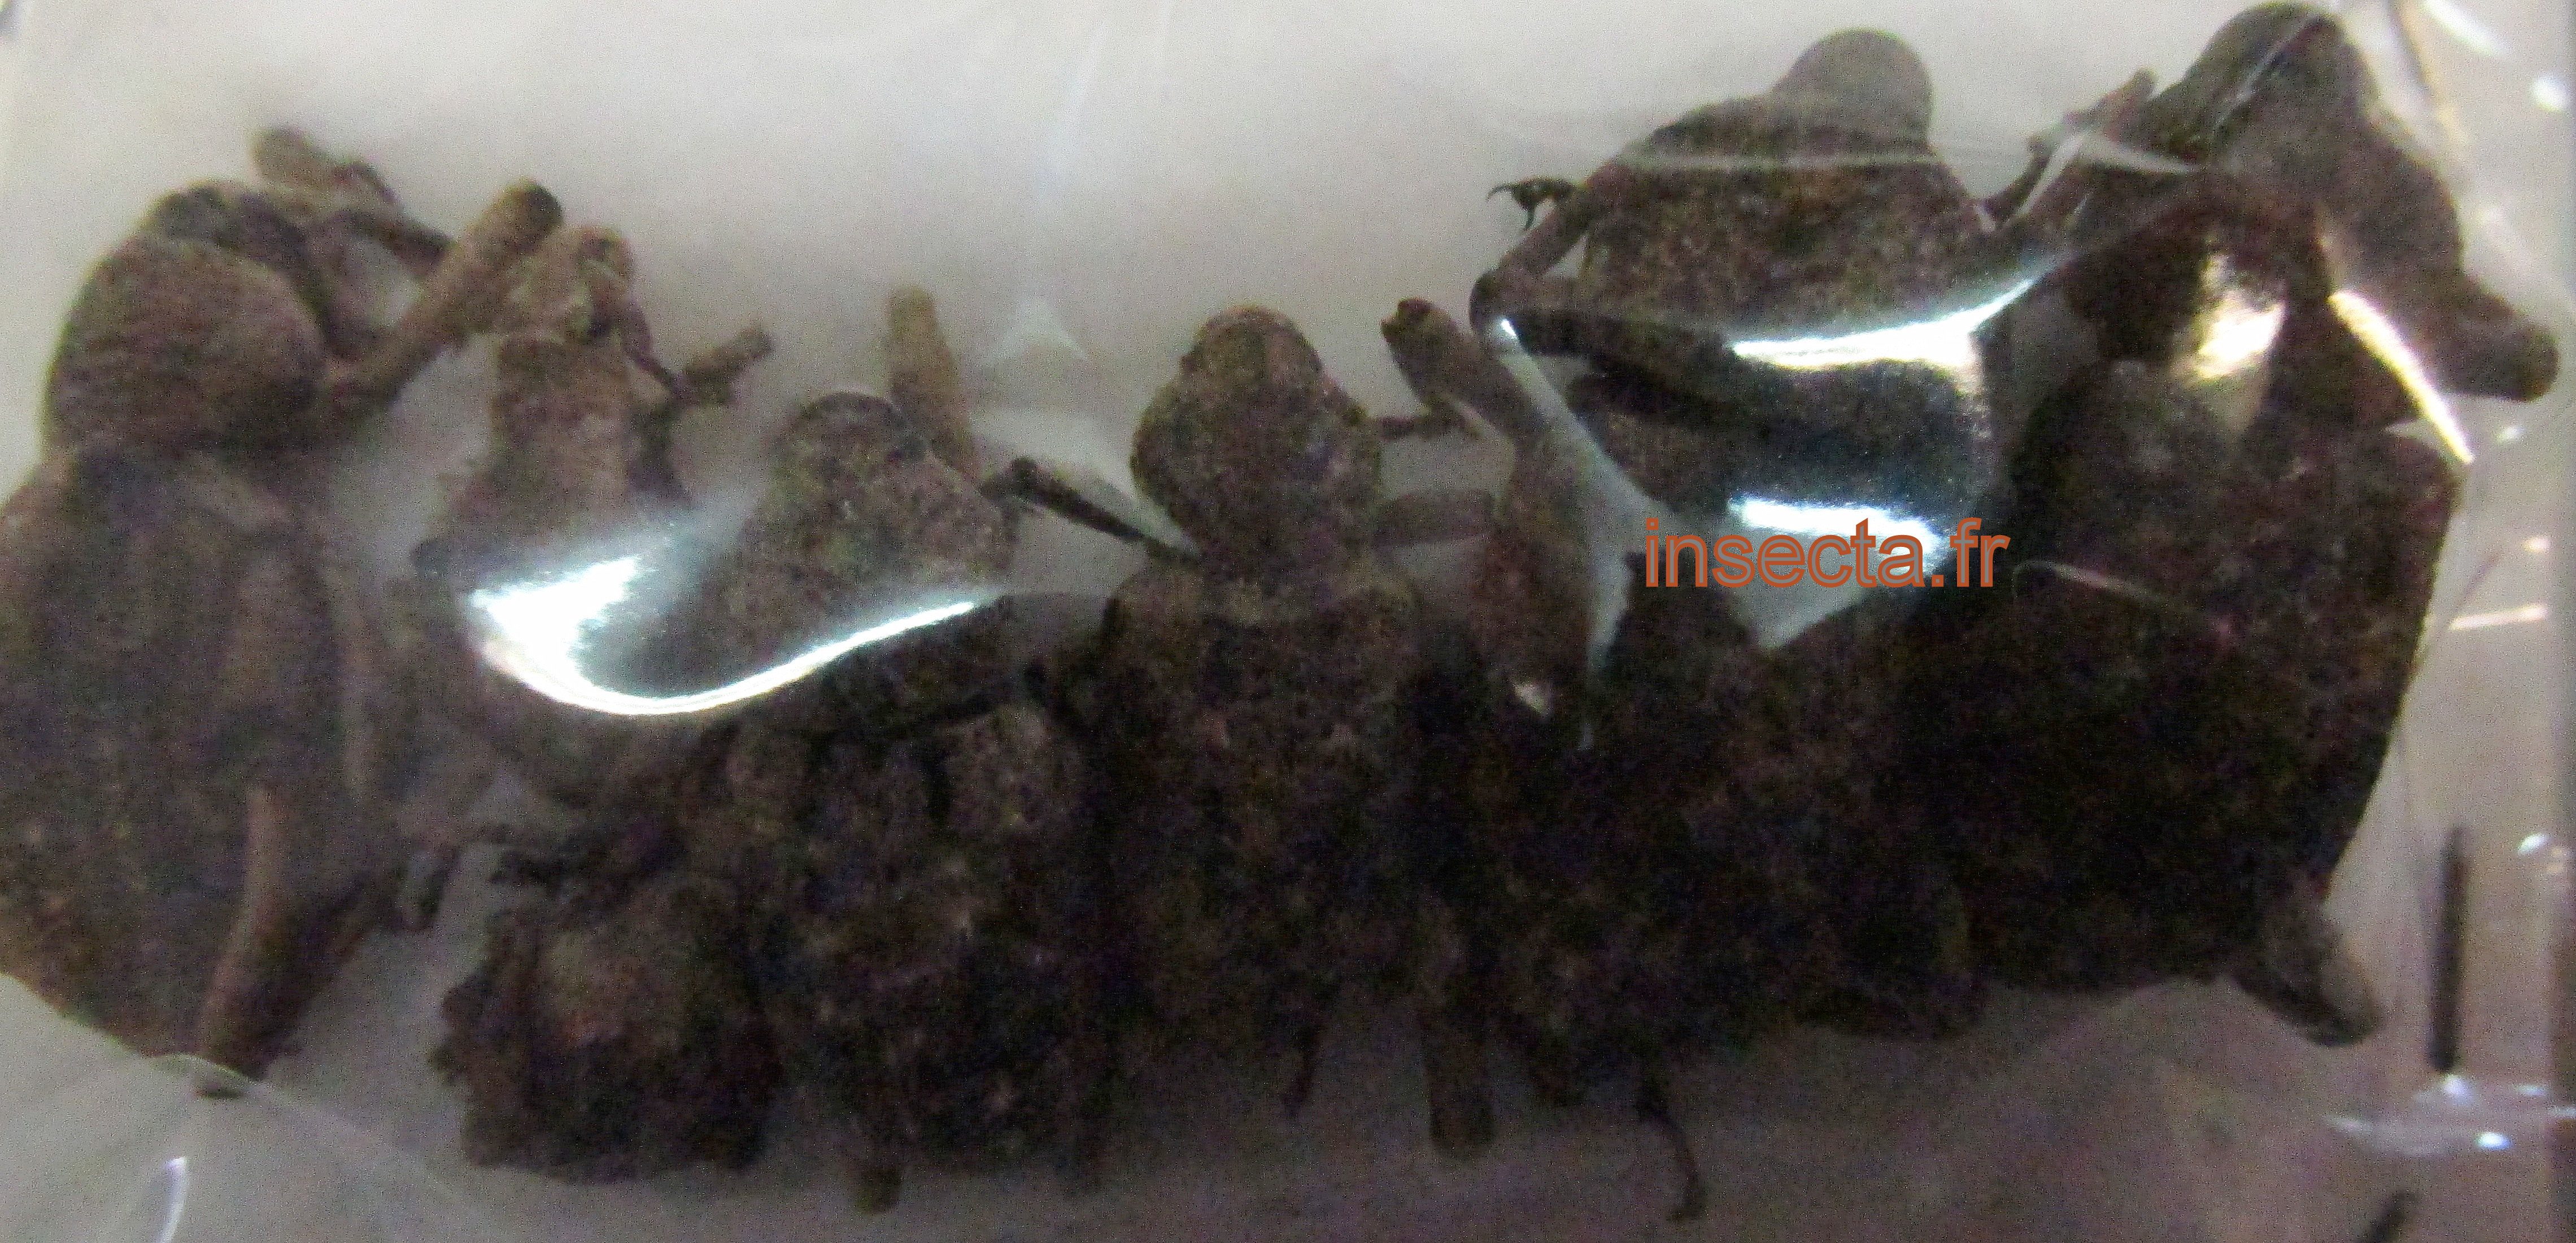 Curculionidae set mixed of 7pcs